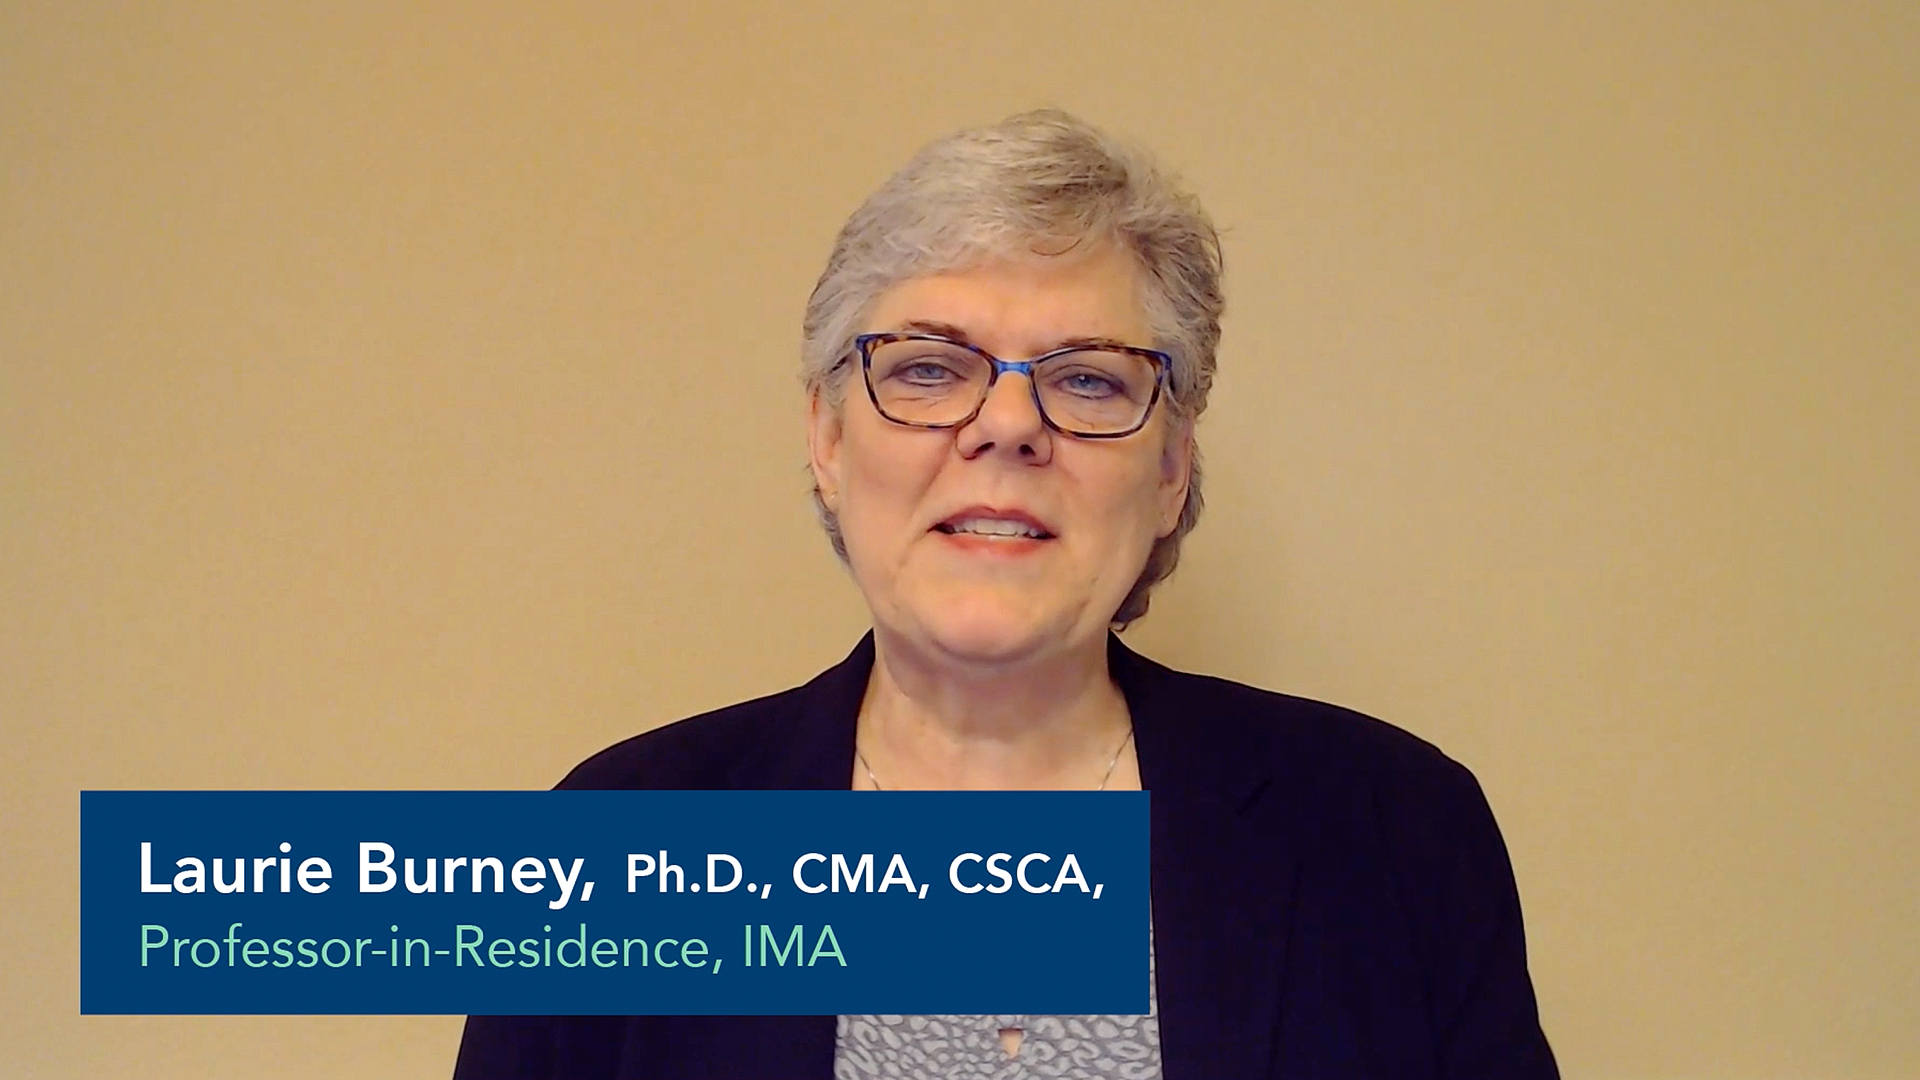 Still of Laurie Burney, Ph.D., CMA, CSCA, Professor-in-Residence, IMA